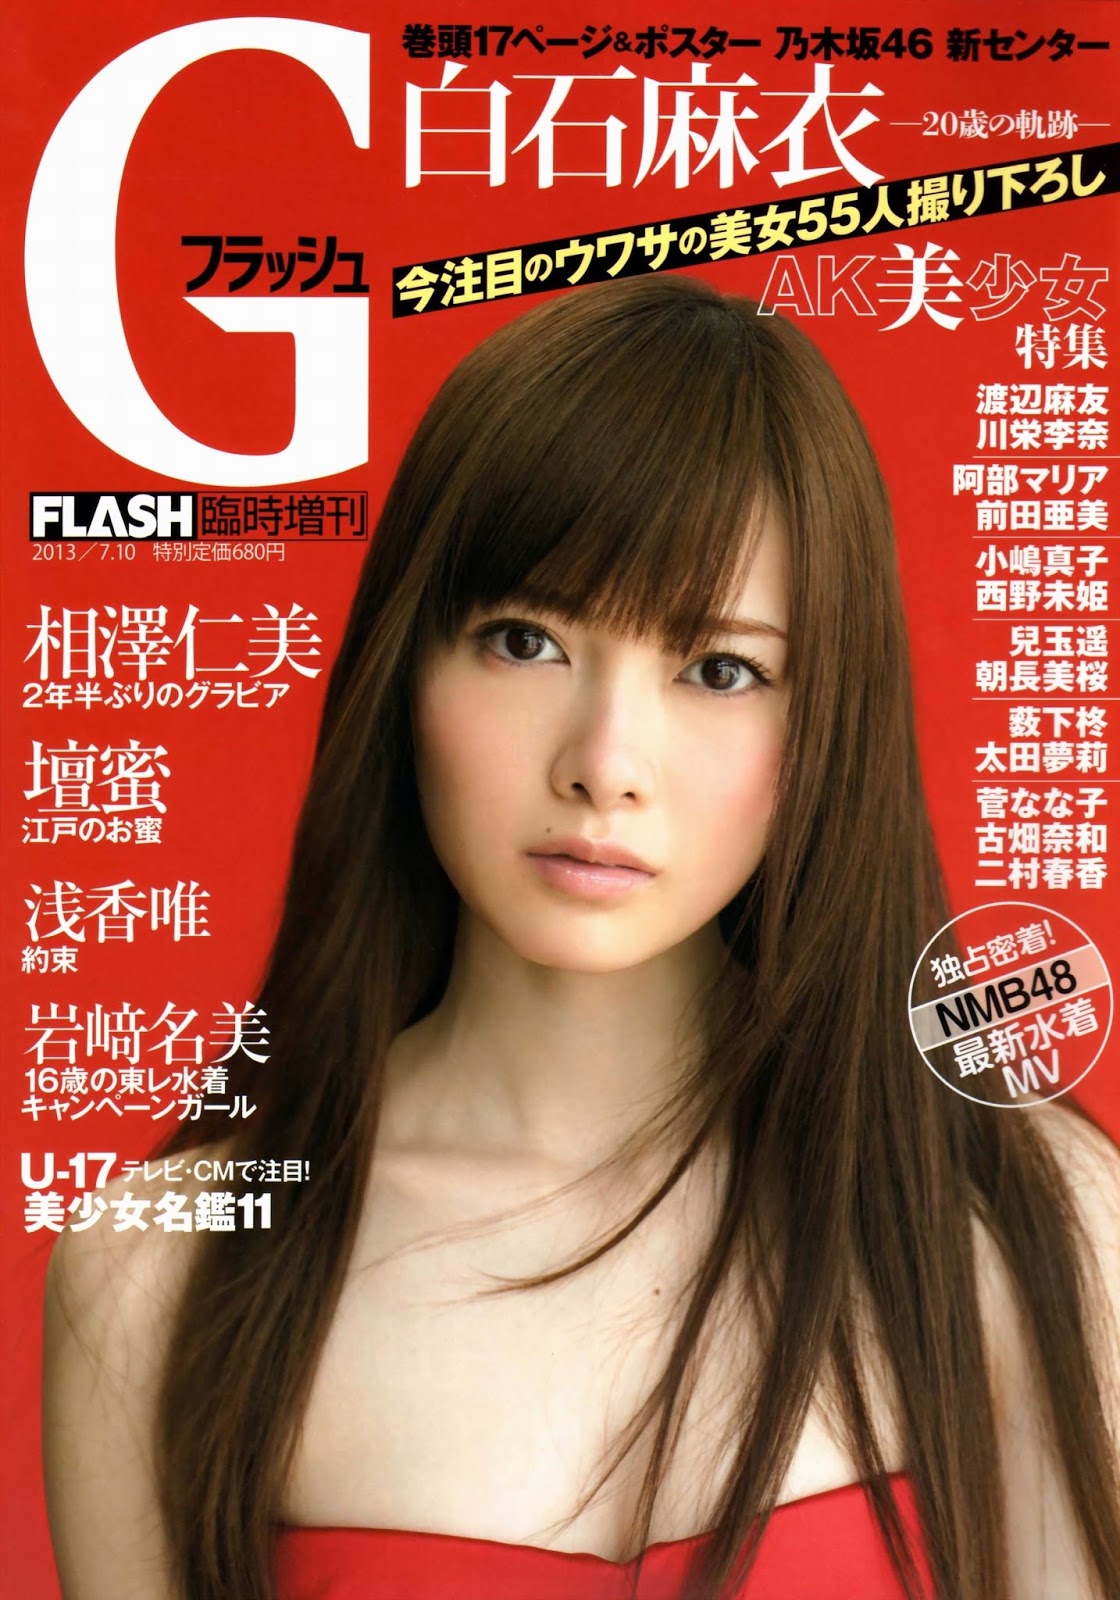 Nao Kanzaki And A Few Friends Nogizaka46 The Mai Shiraishi Post 13 Mag Spreads